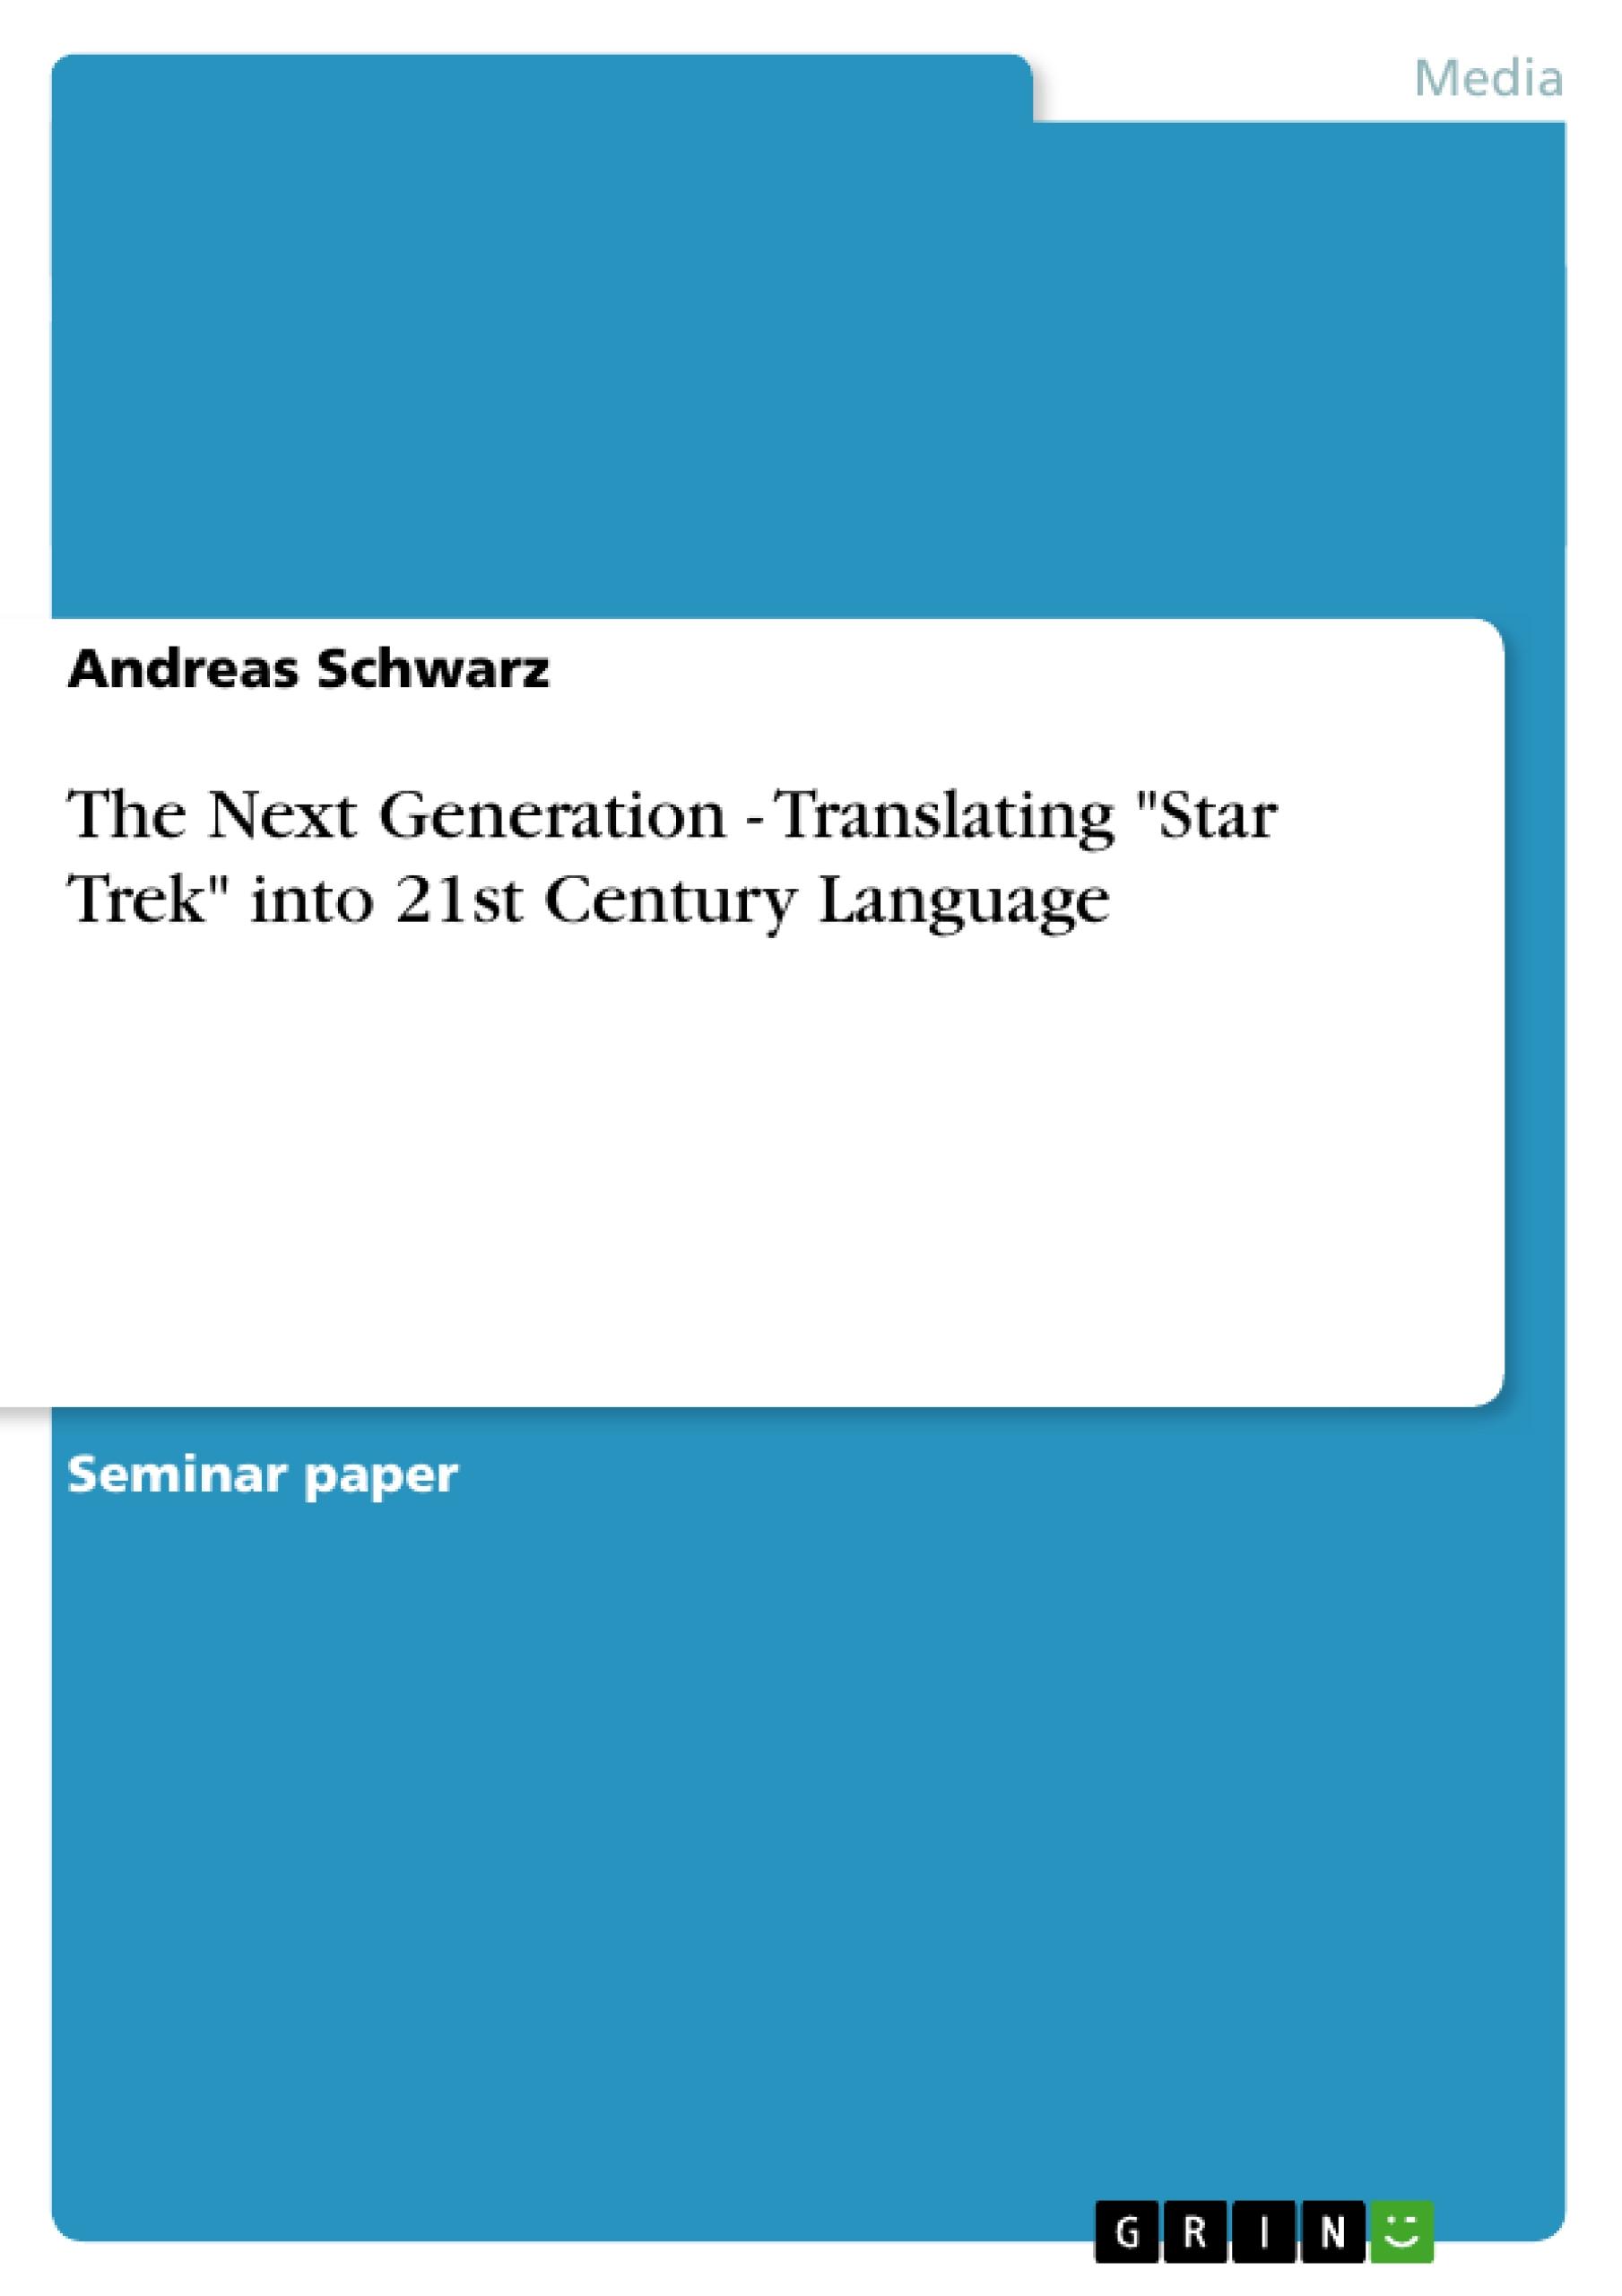 The Next Generation - Translating "Star Trek" into 21st Century Language